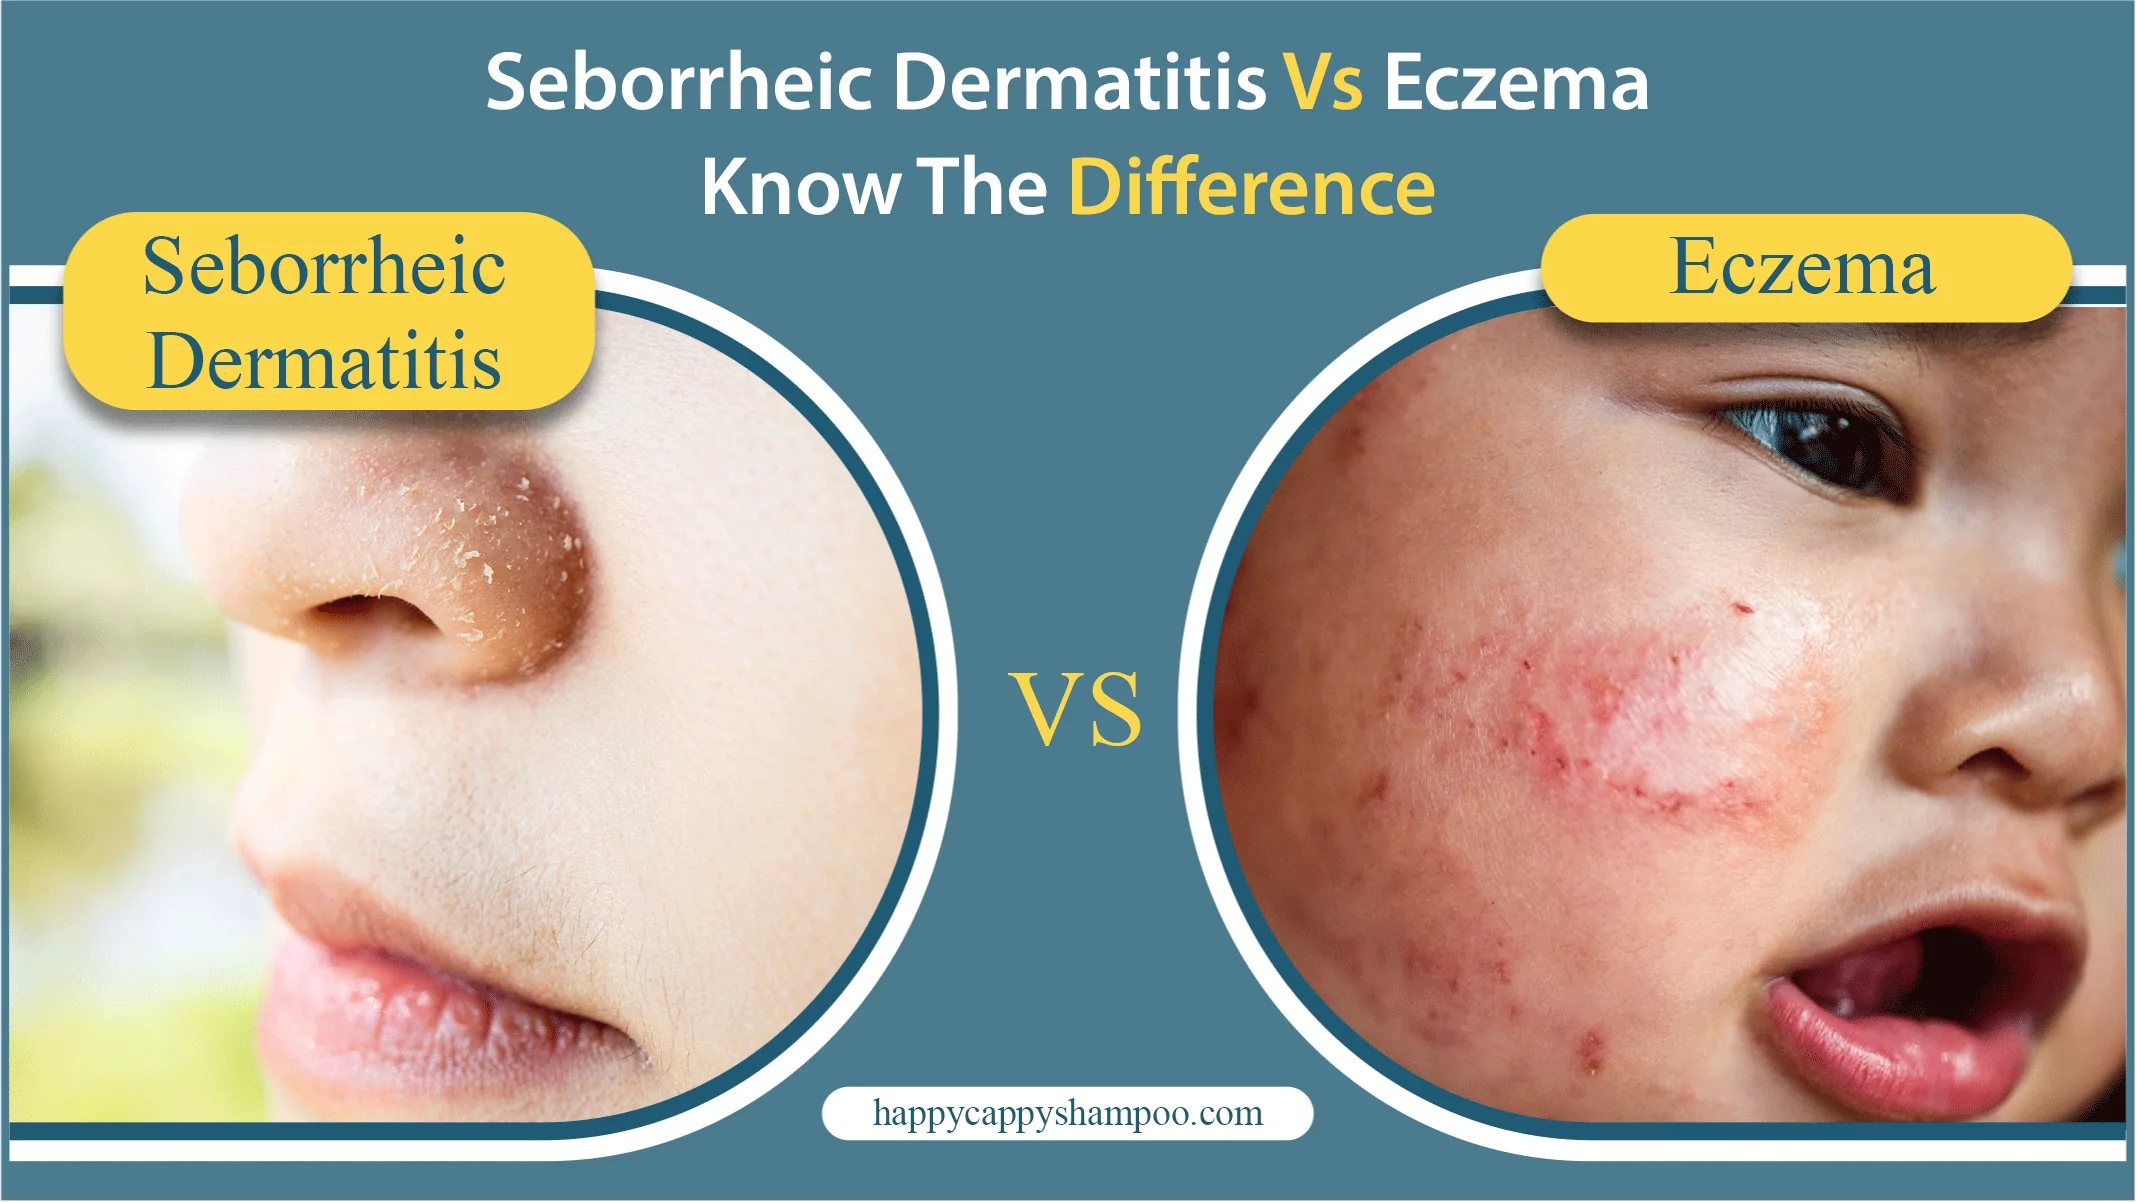 Seborrheic Dermatitis vs Eczema: Know The Difference